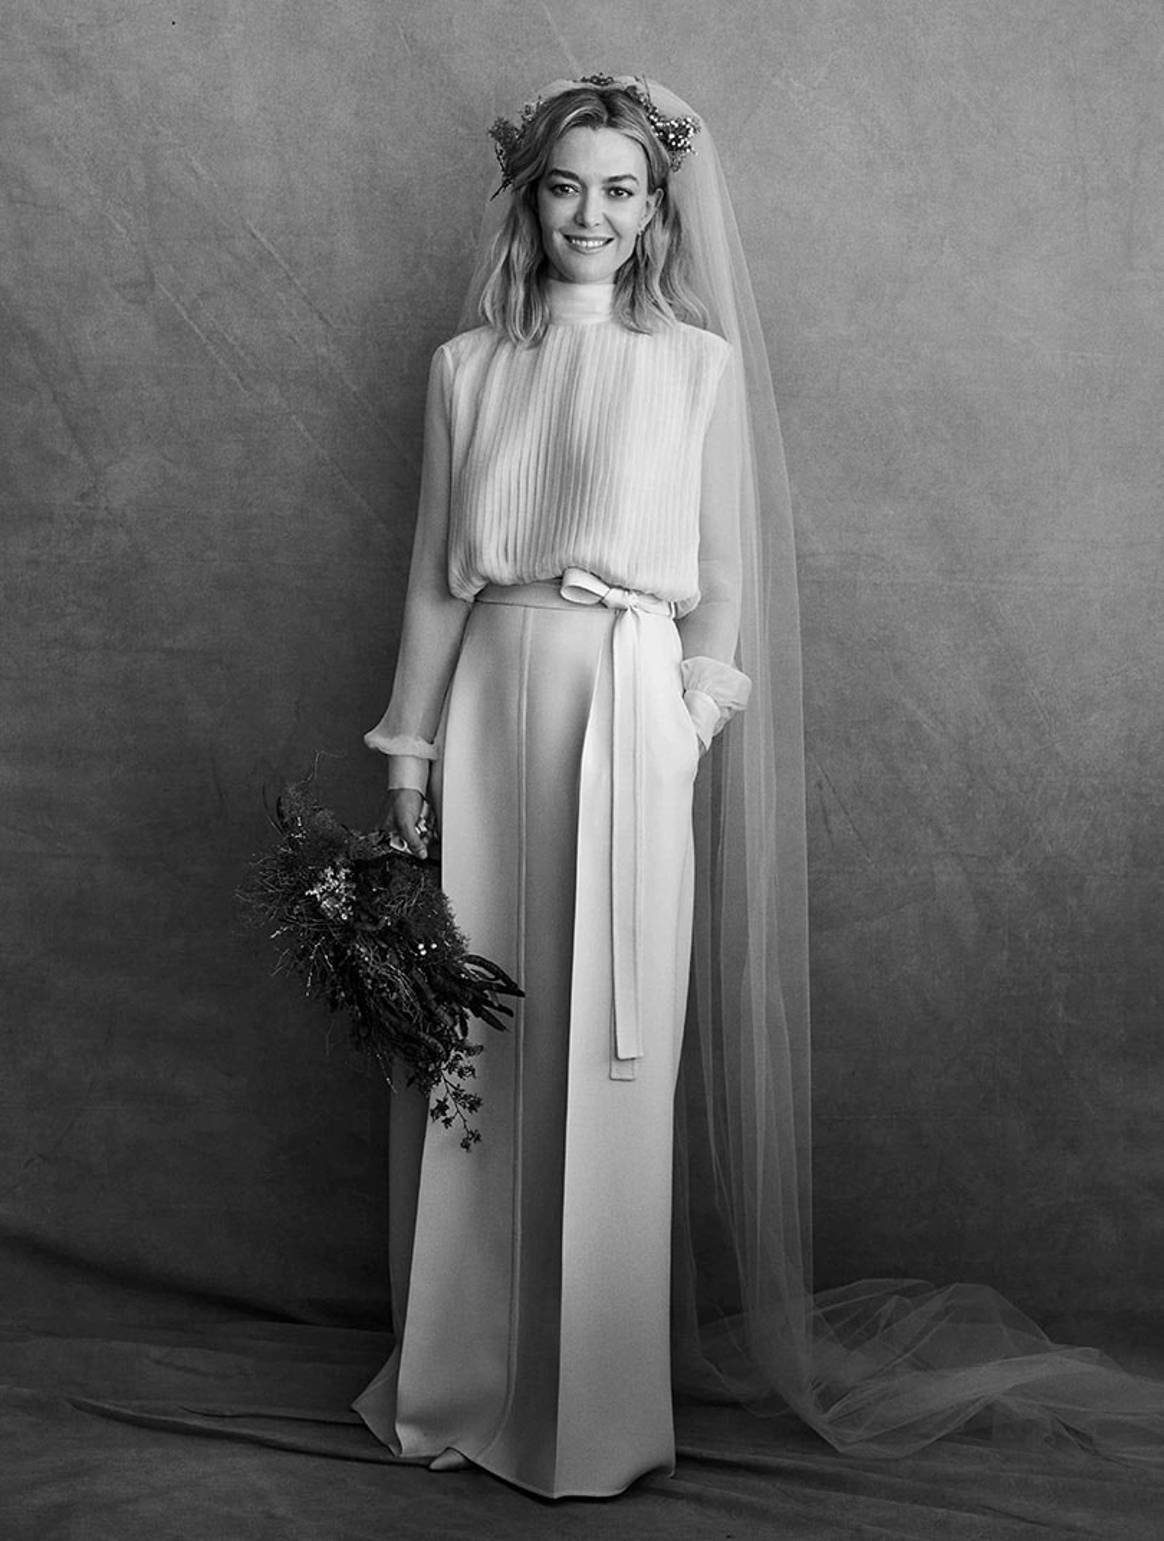 Marta Ortega (fille du fondateur de Zara) porte une robe Valentino à son mariage